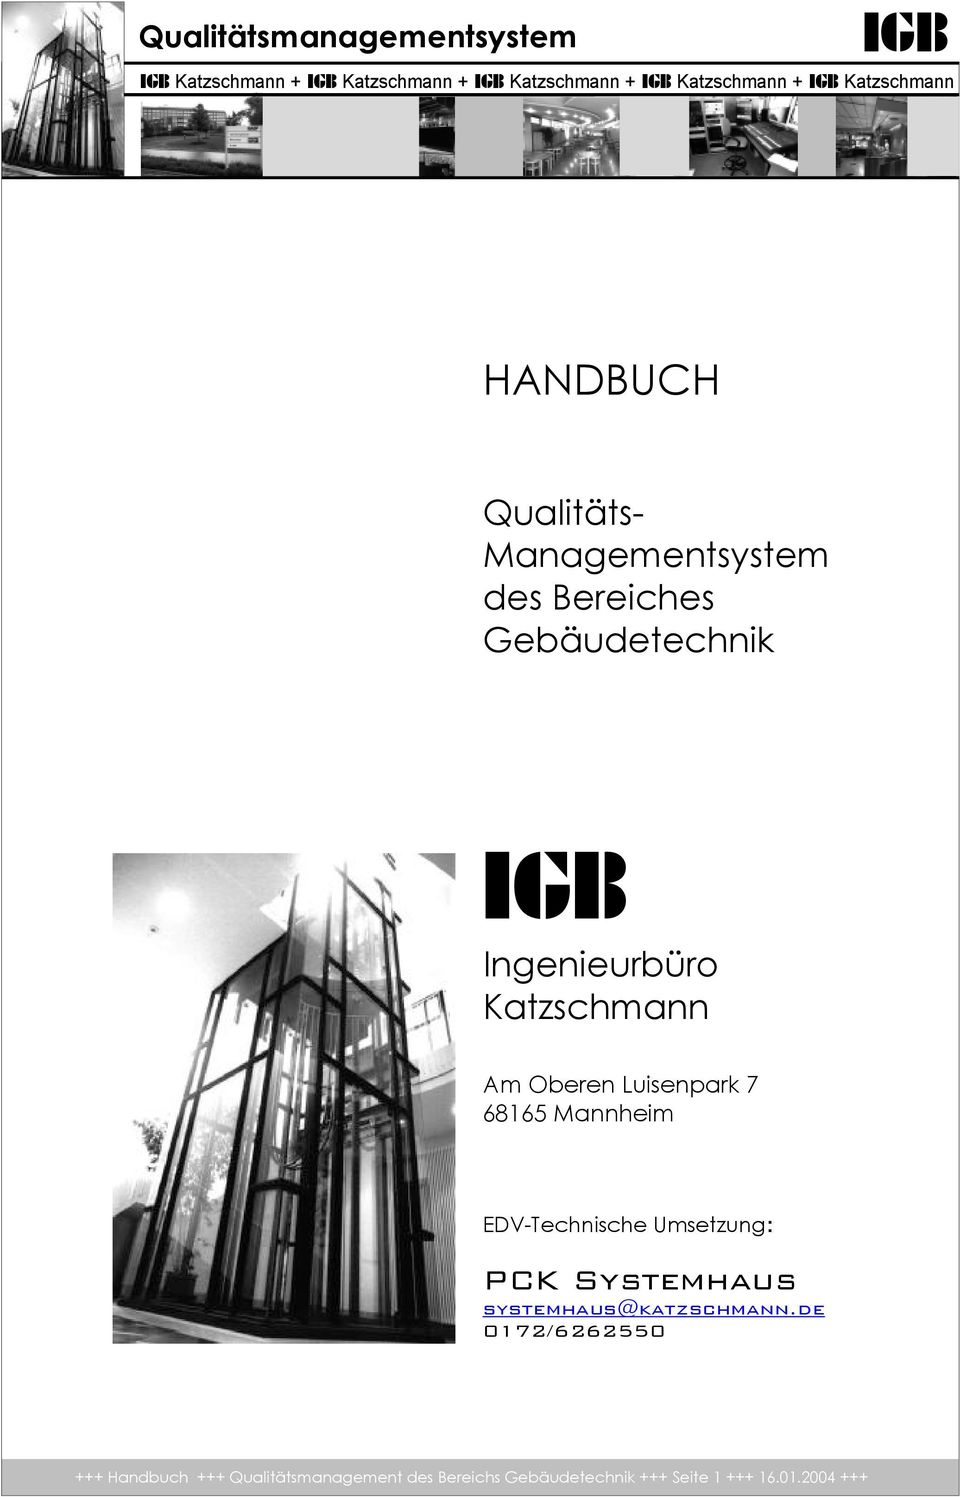 7 68165 Mannheim EDV-Technische Umsetzung: PCK Systemhaus systemhaus@katzschmann.